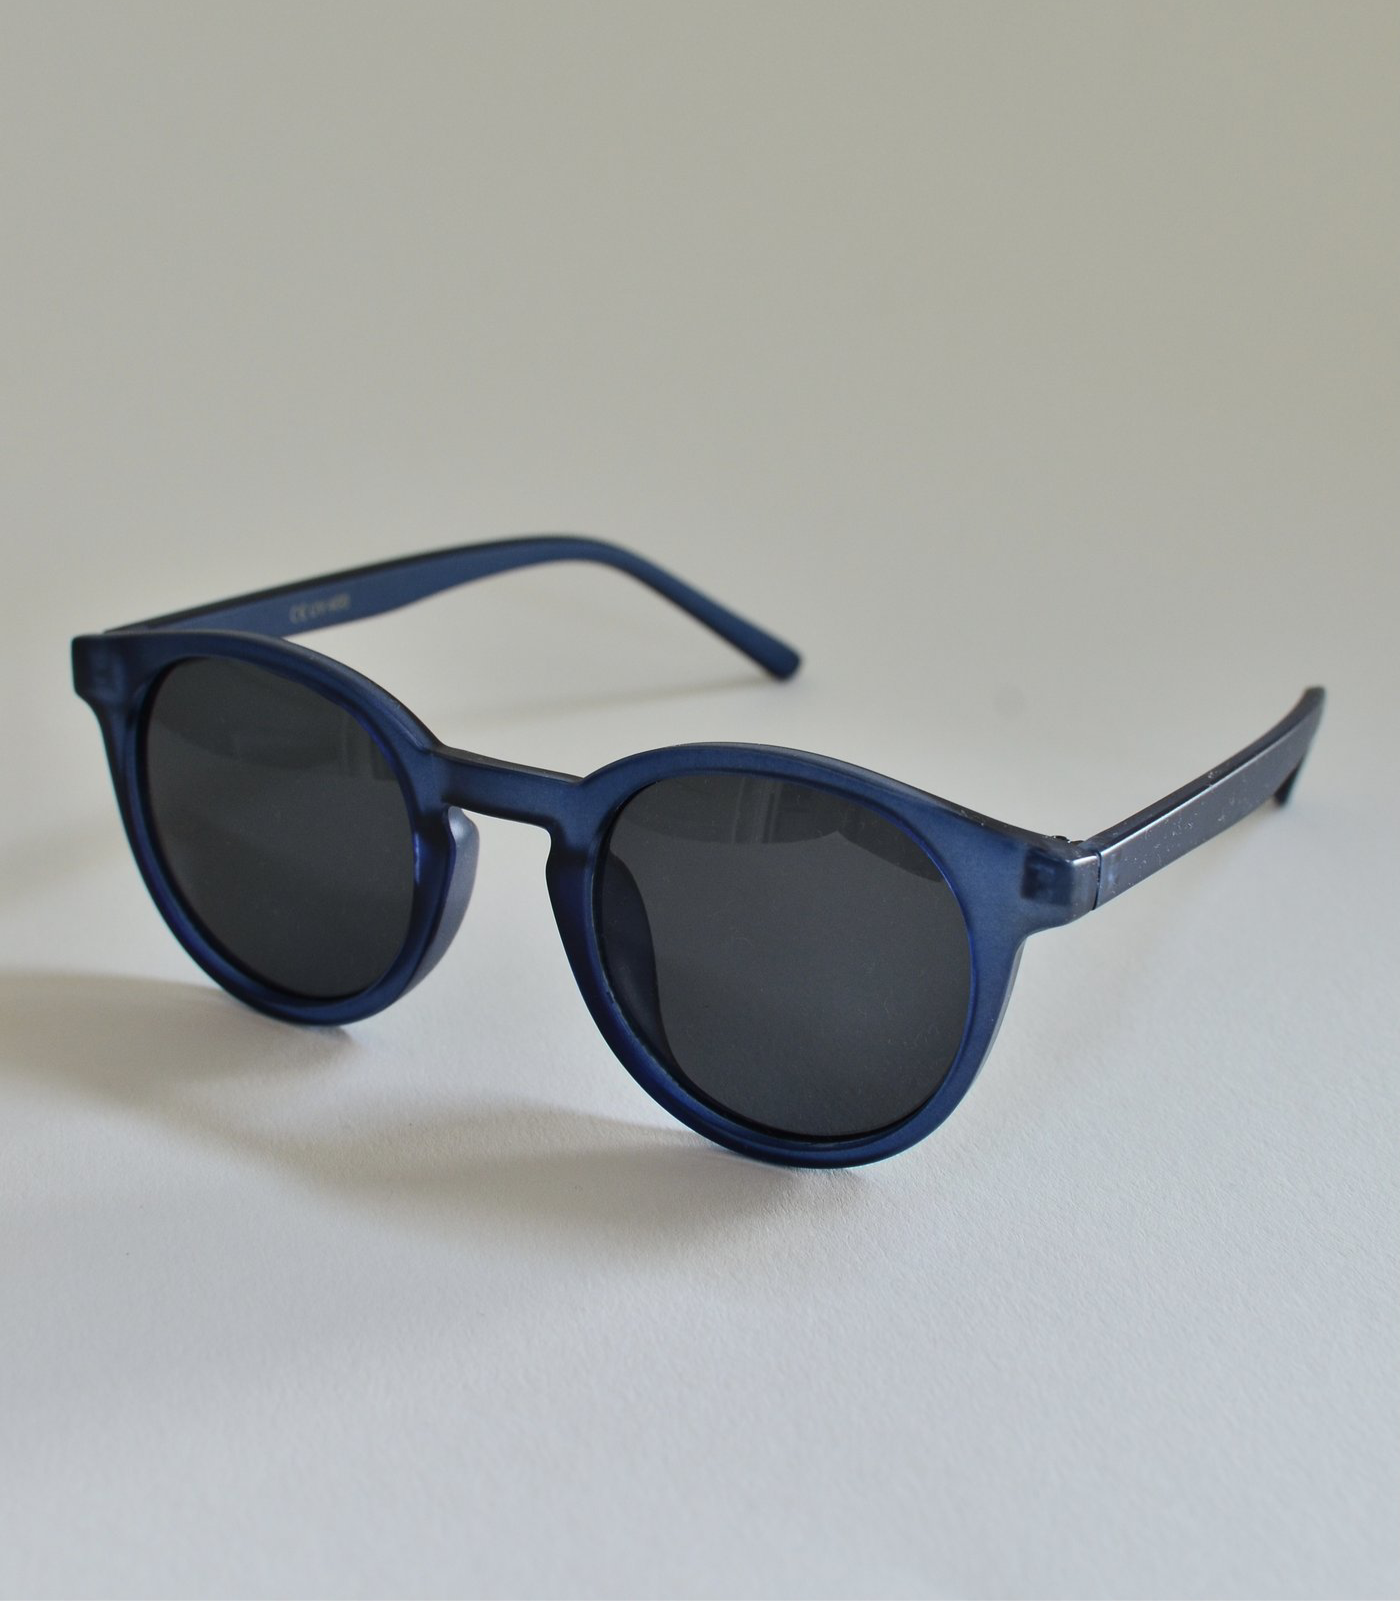 Kids recycled plastic retro style blue sunglasses